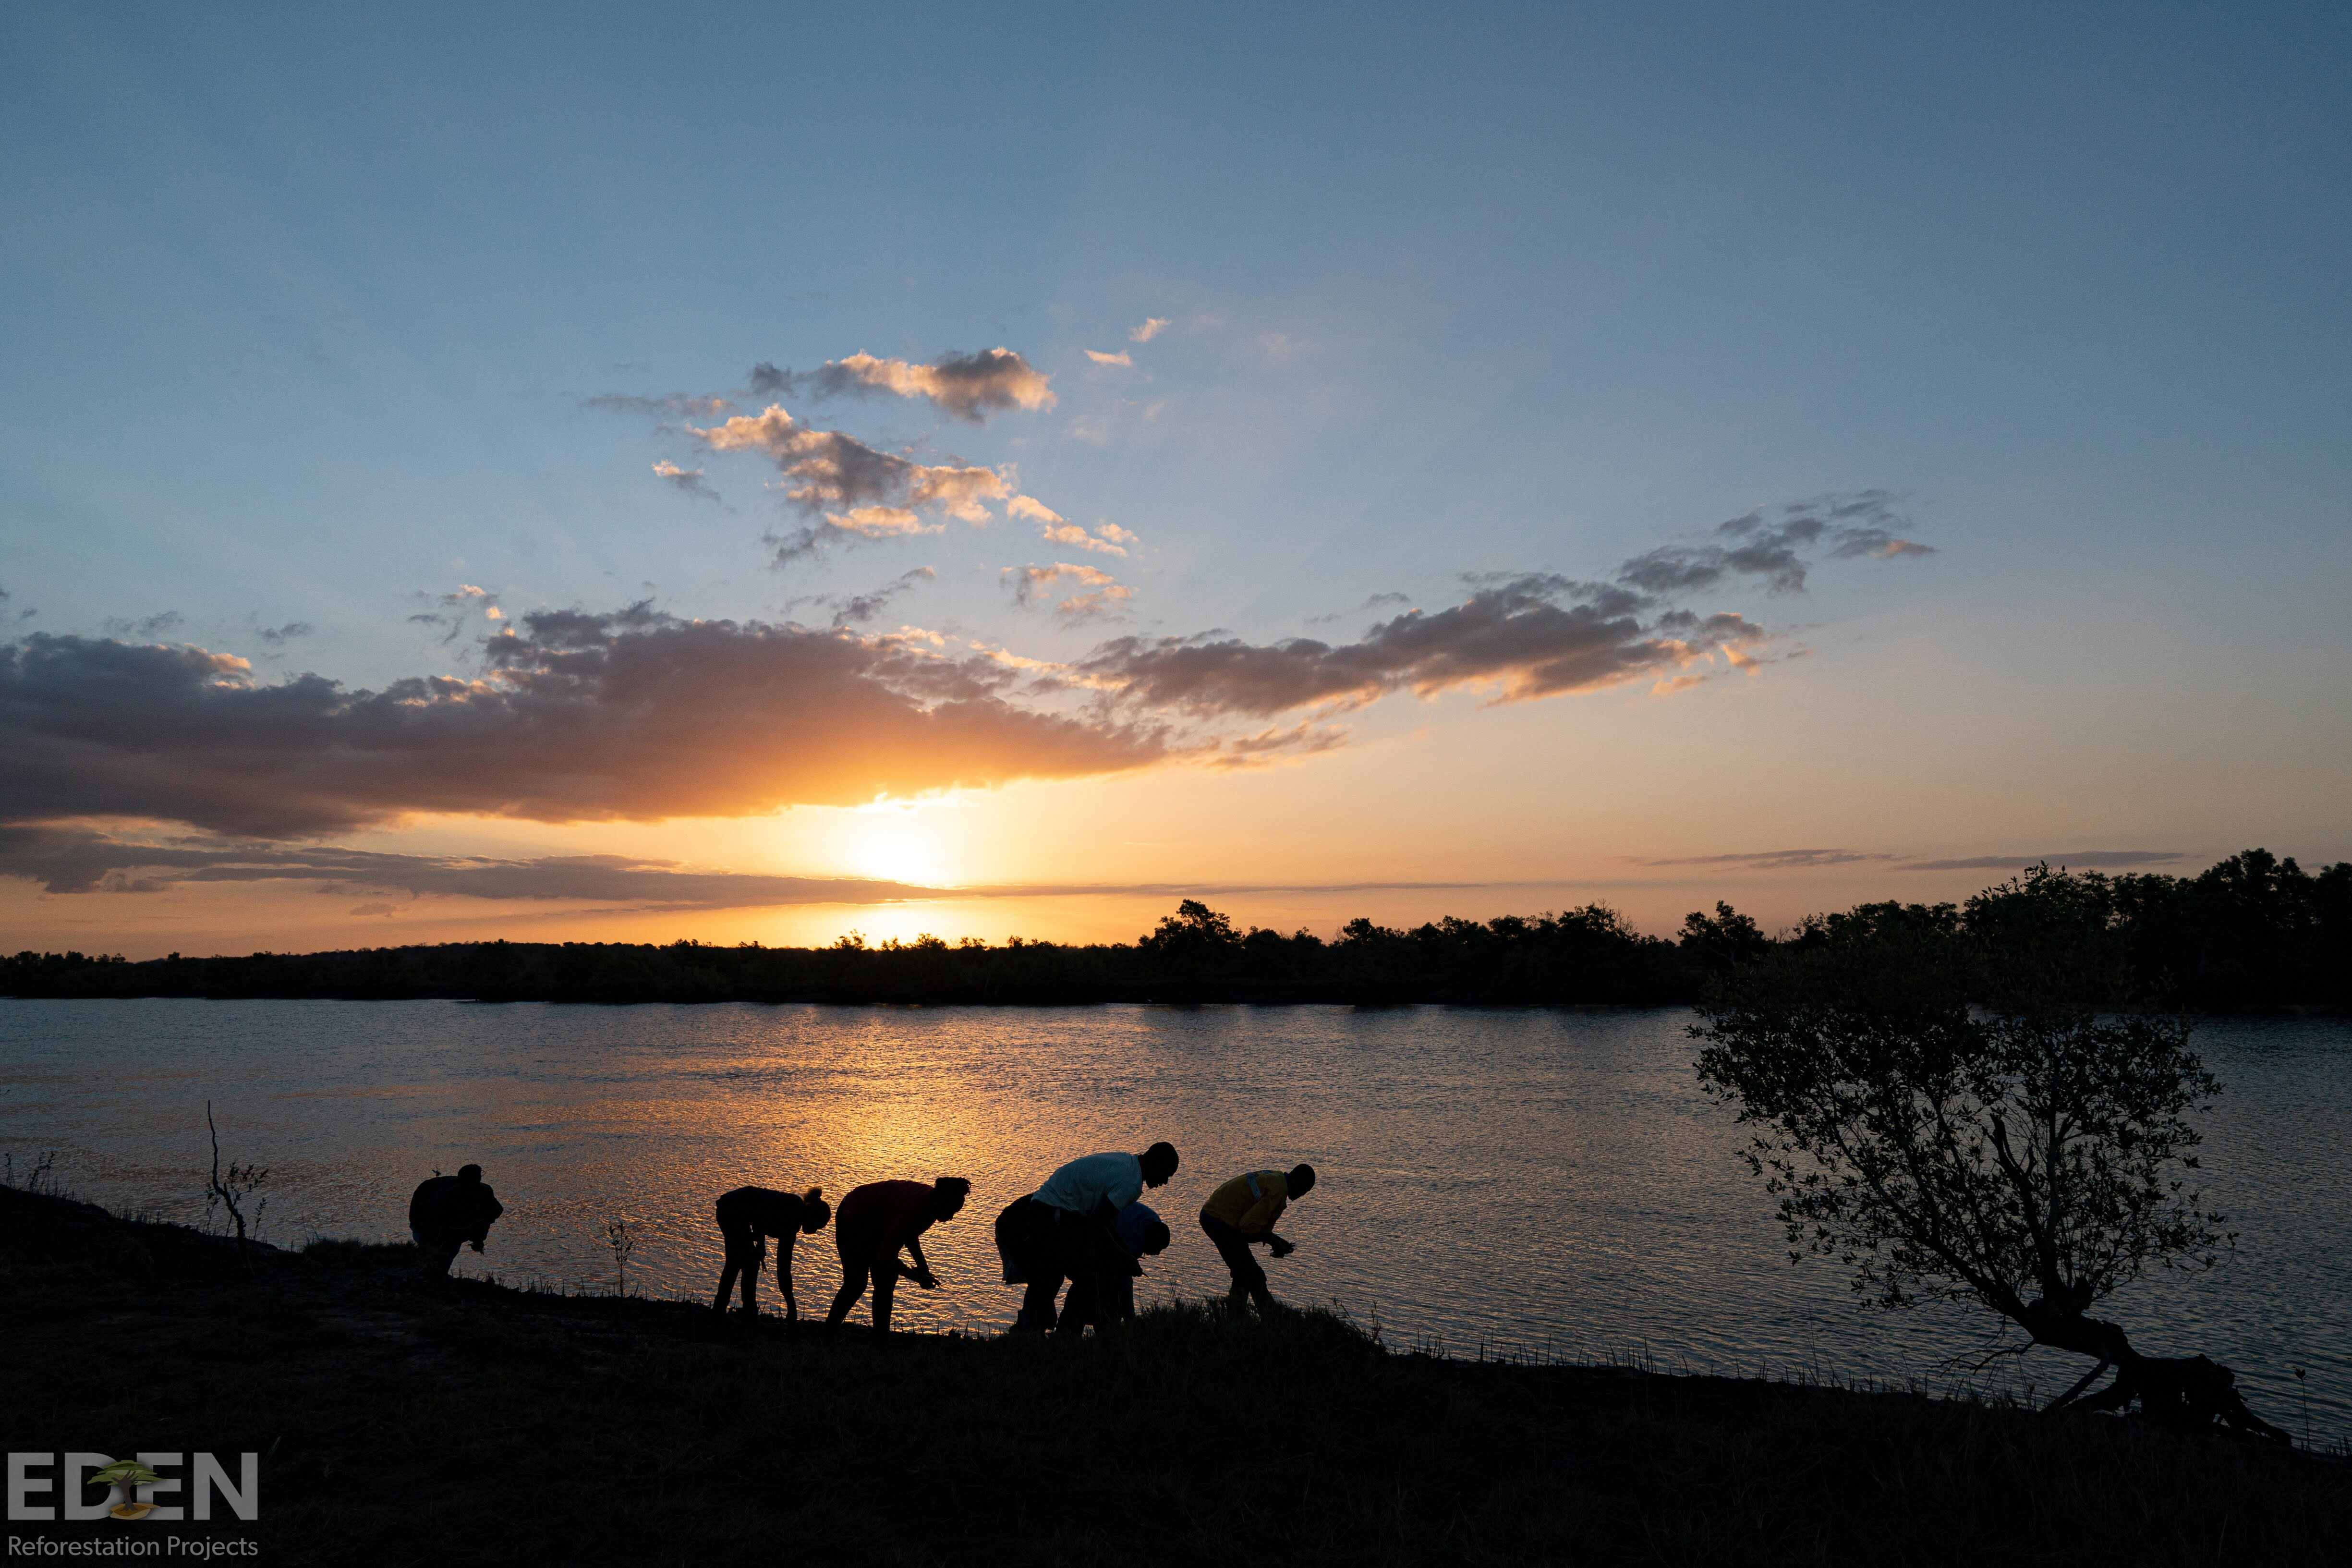 sunset image of lake with people walking